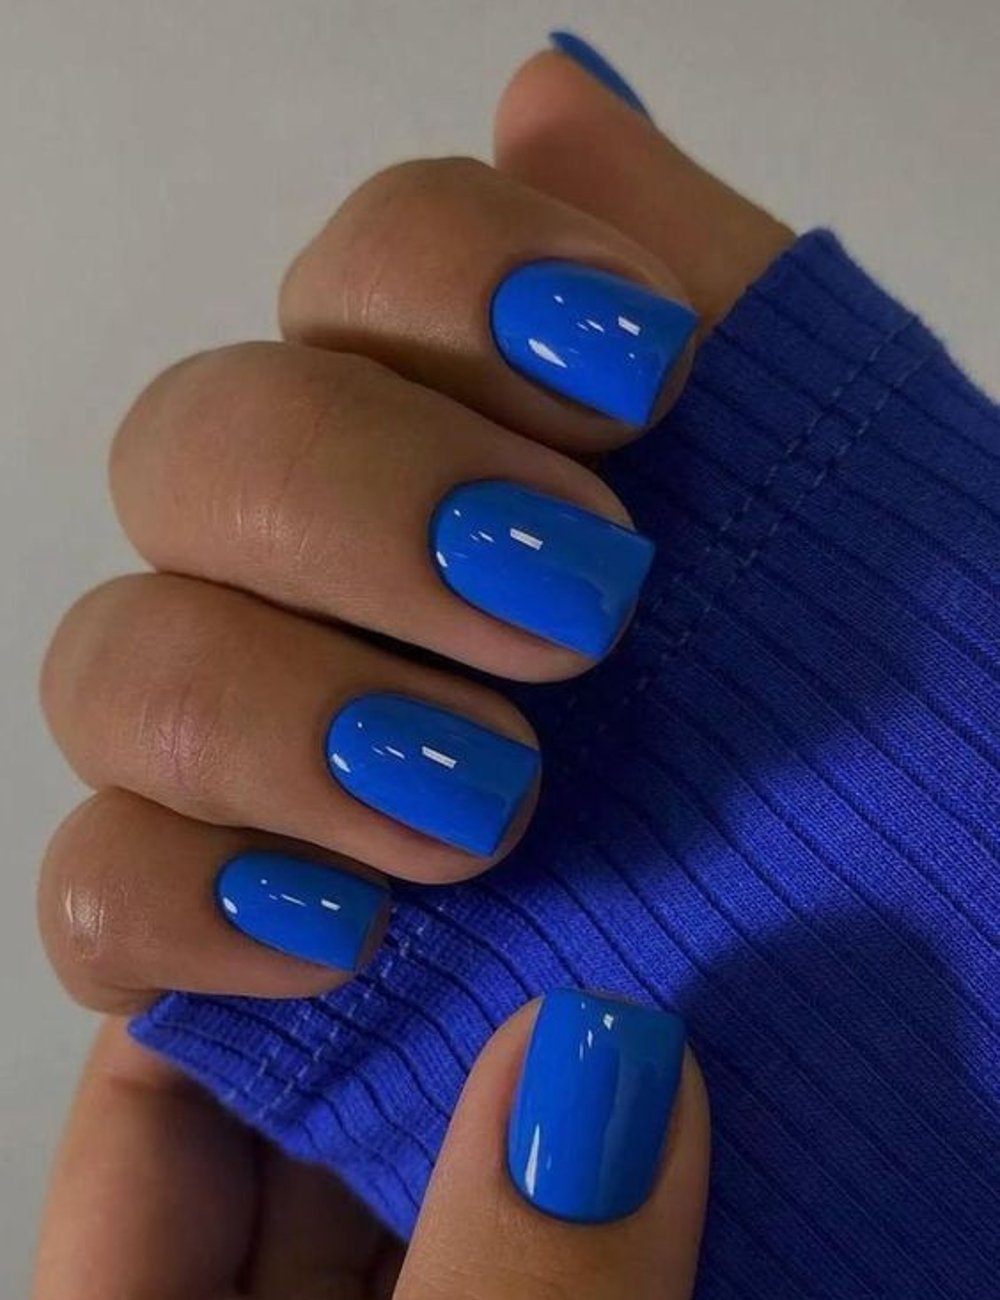 Esmalte azul - ano novo - cor de esmalte - Personare - unhas - https://stealthelook.com.br